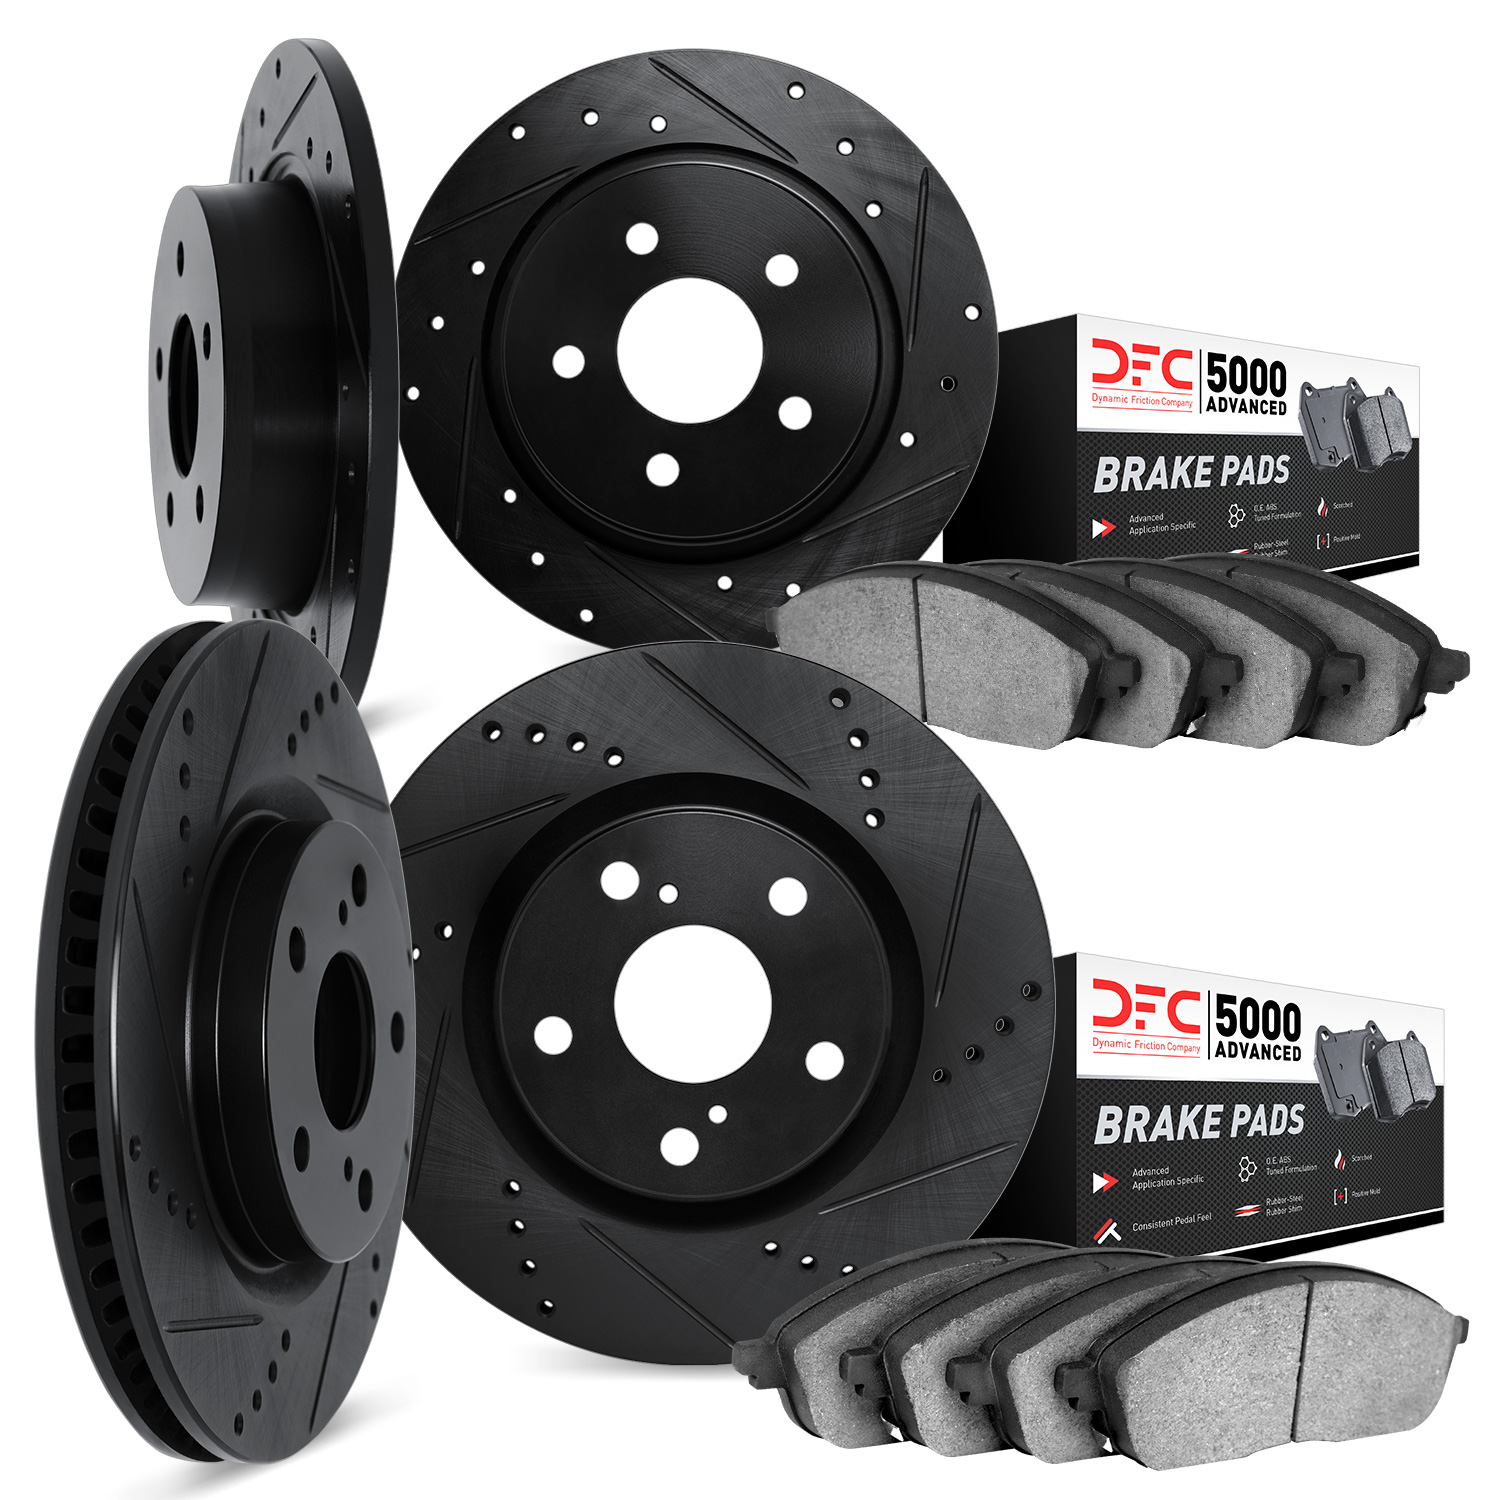 8504-07003 Drilled/Slotted Brake Rotors w/5000 Advanced Brake Pads Kit [Black], 2014-2019 Mopar, Position: Front and Rear